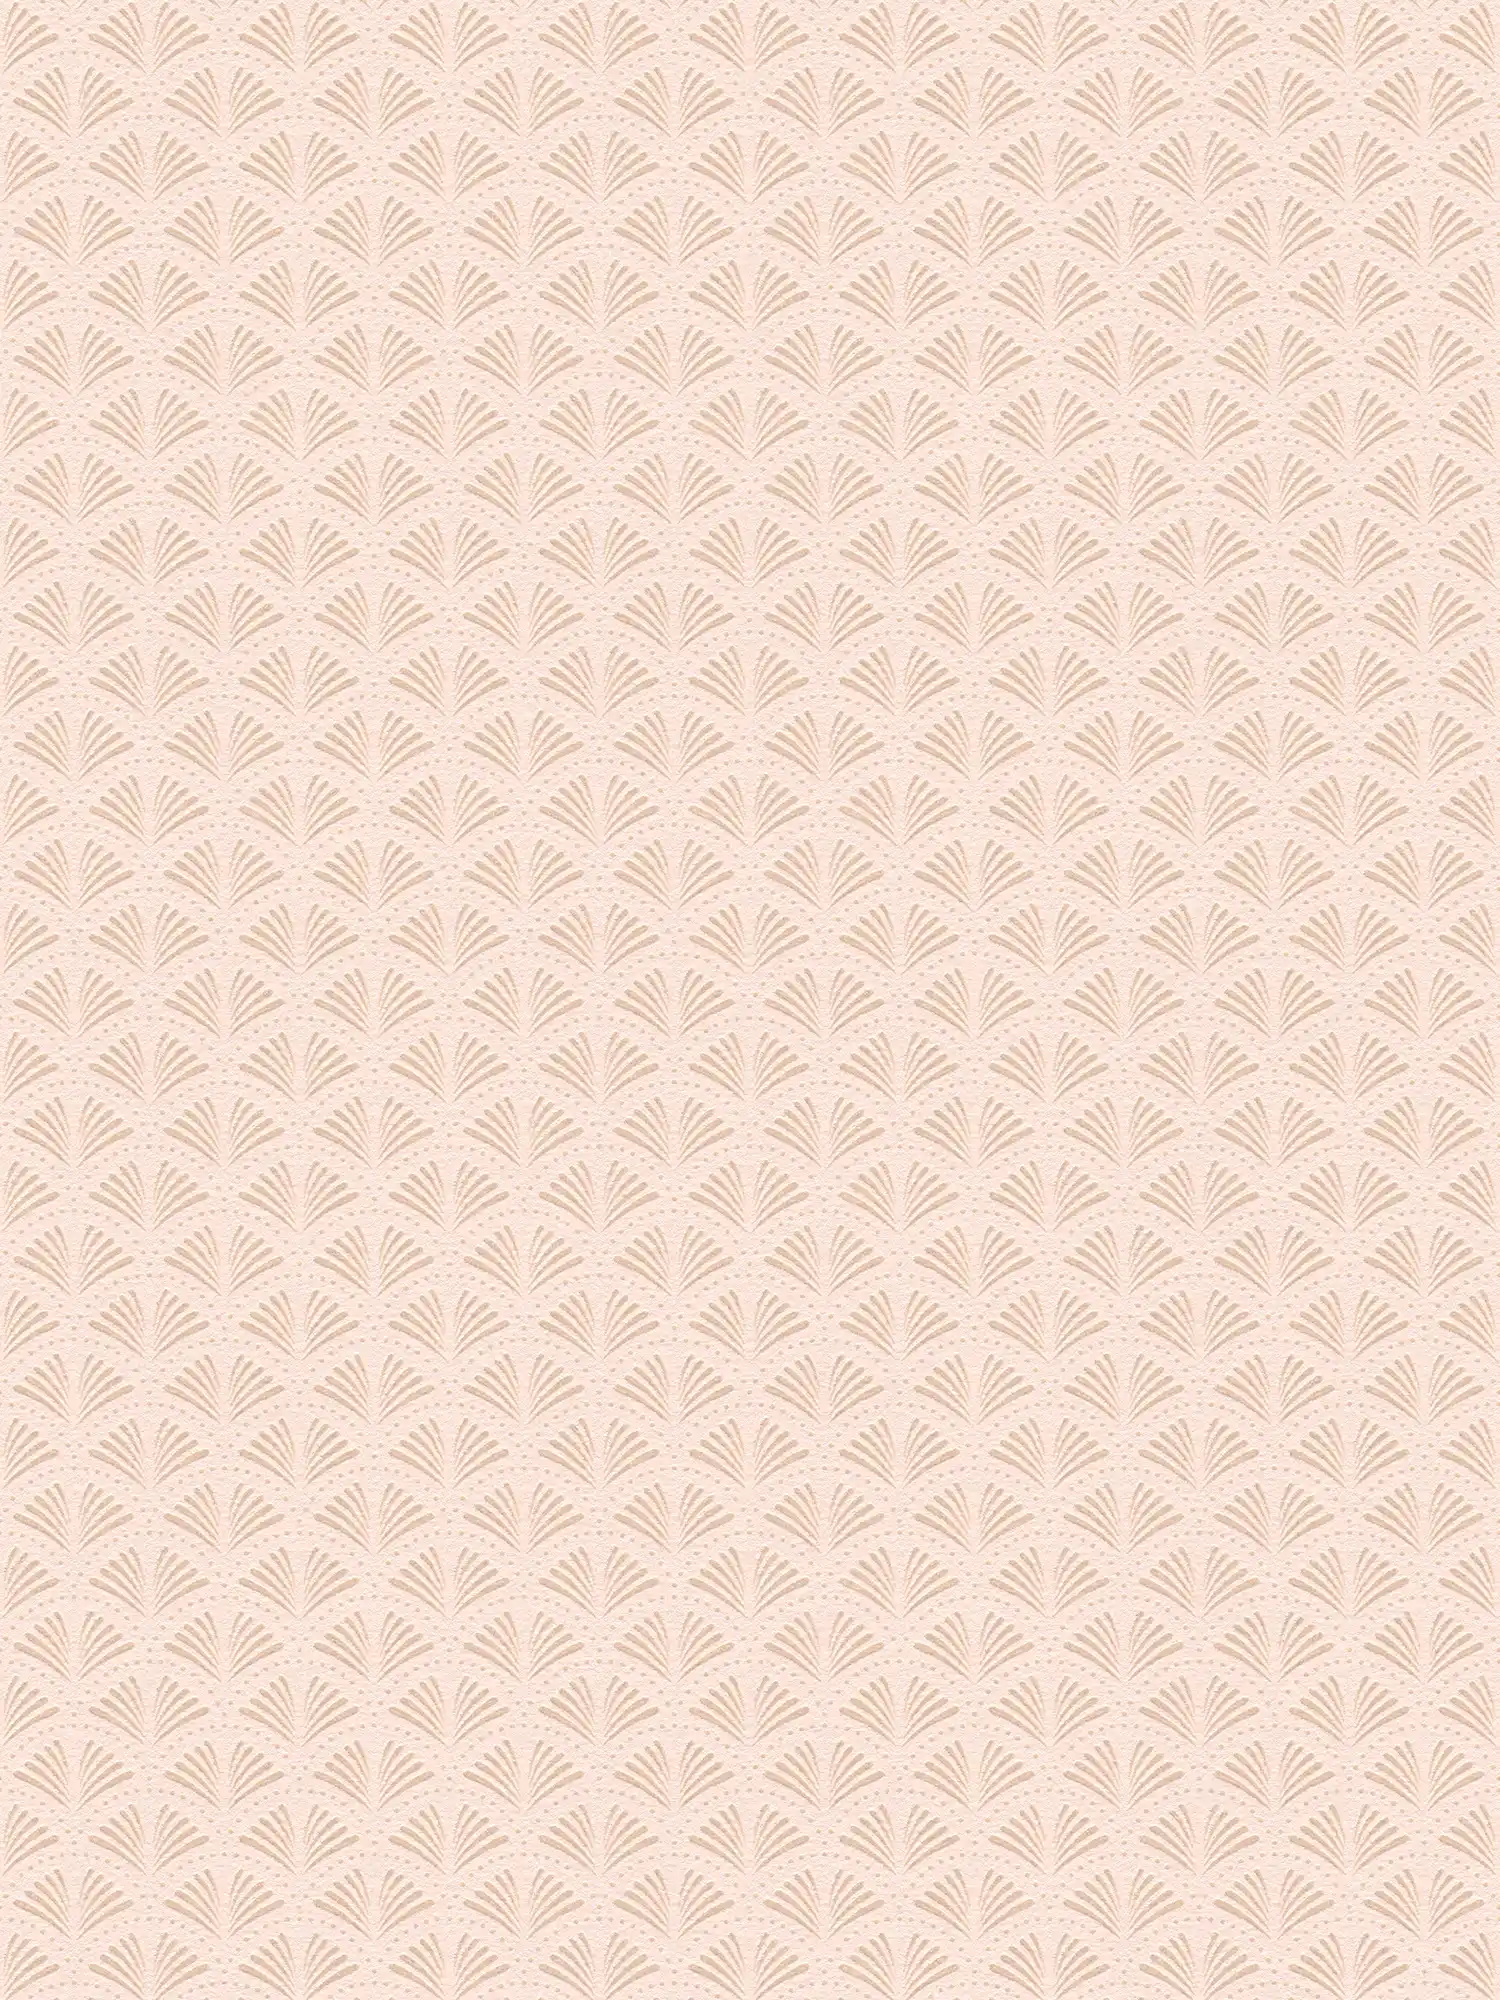 Pink non-woven wallpaper with texture & metallic pattern - cream, metallic, pink
